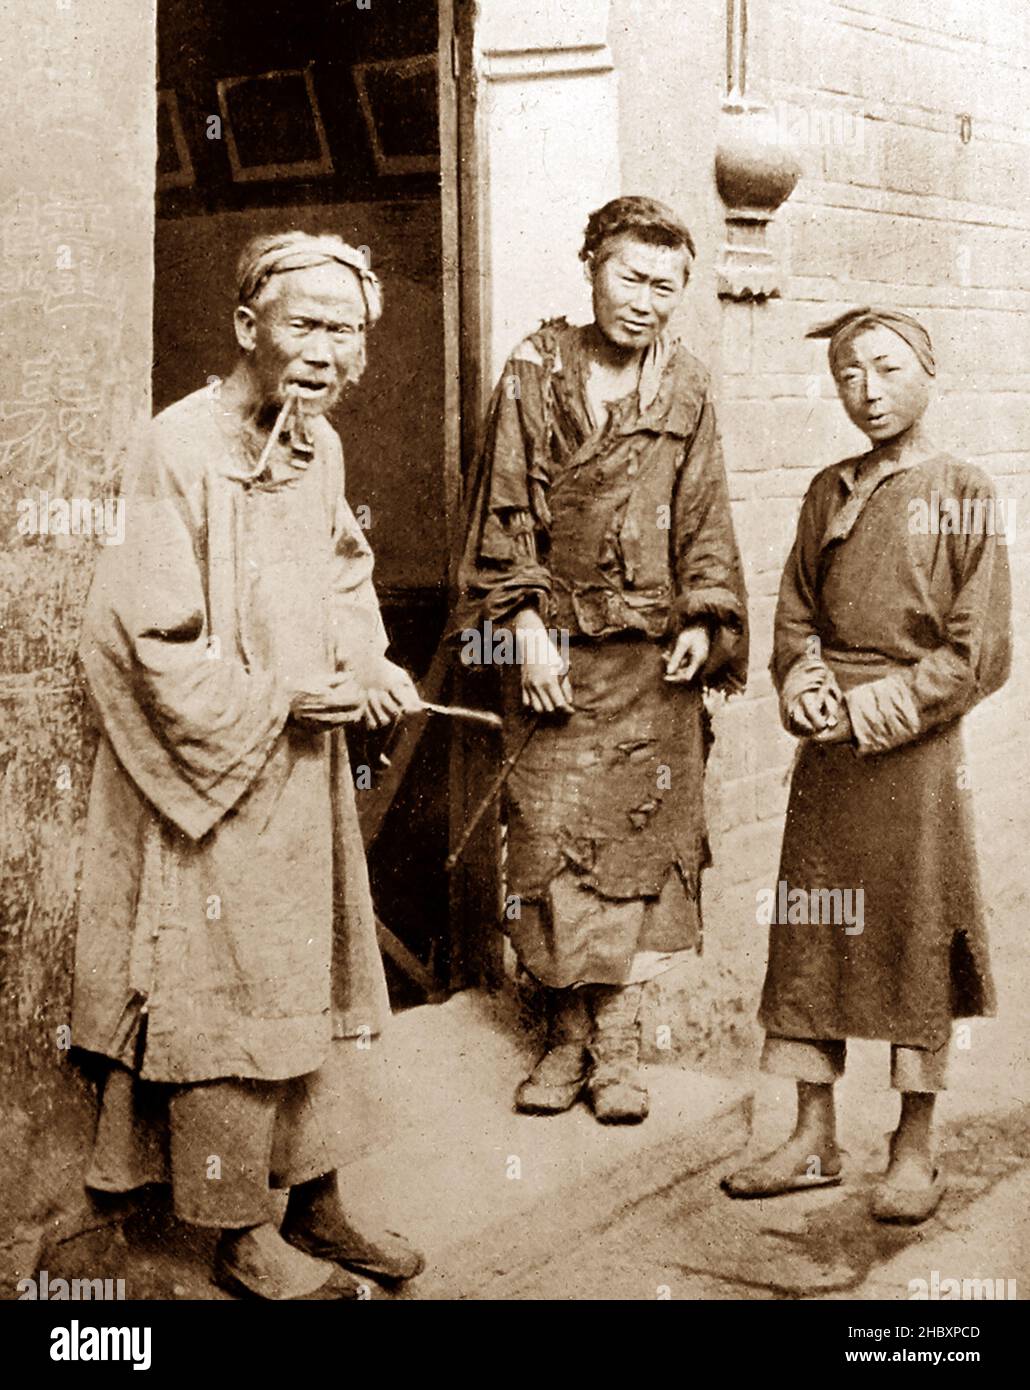 Street beggars, China, early 1900s Stock Photo